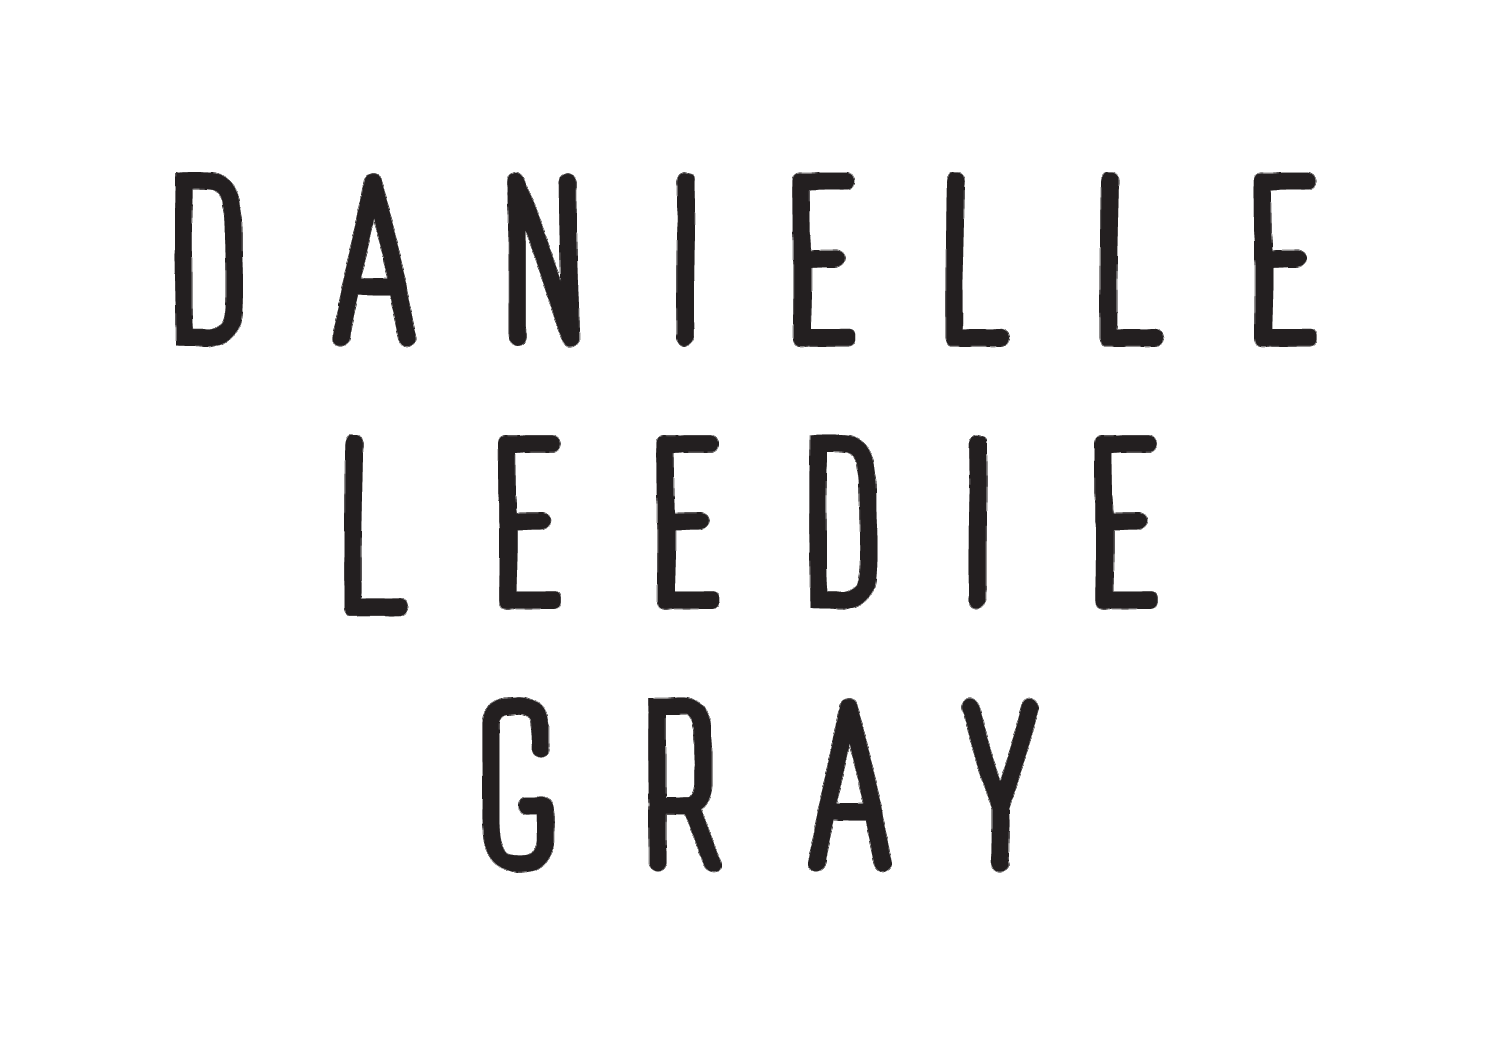 Aboriginal Artist and Graphic Designer - Danielle Leedie Gray